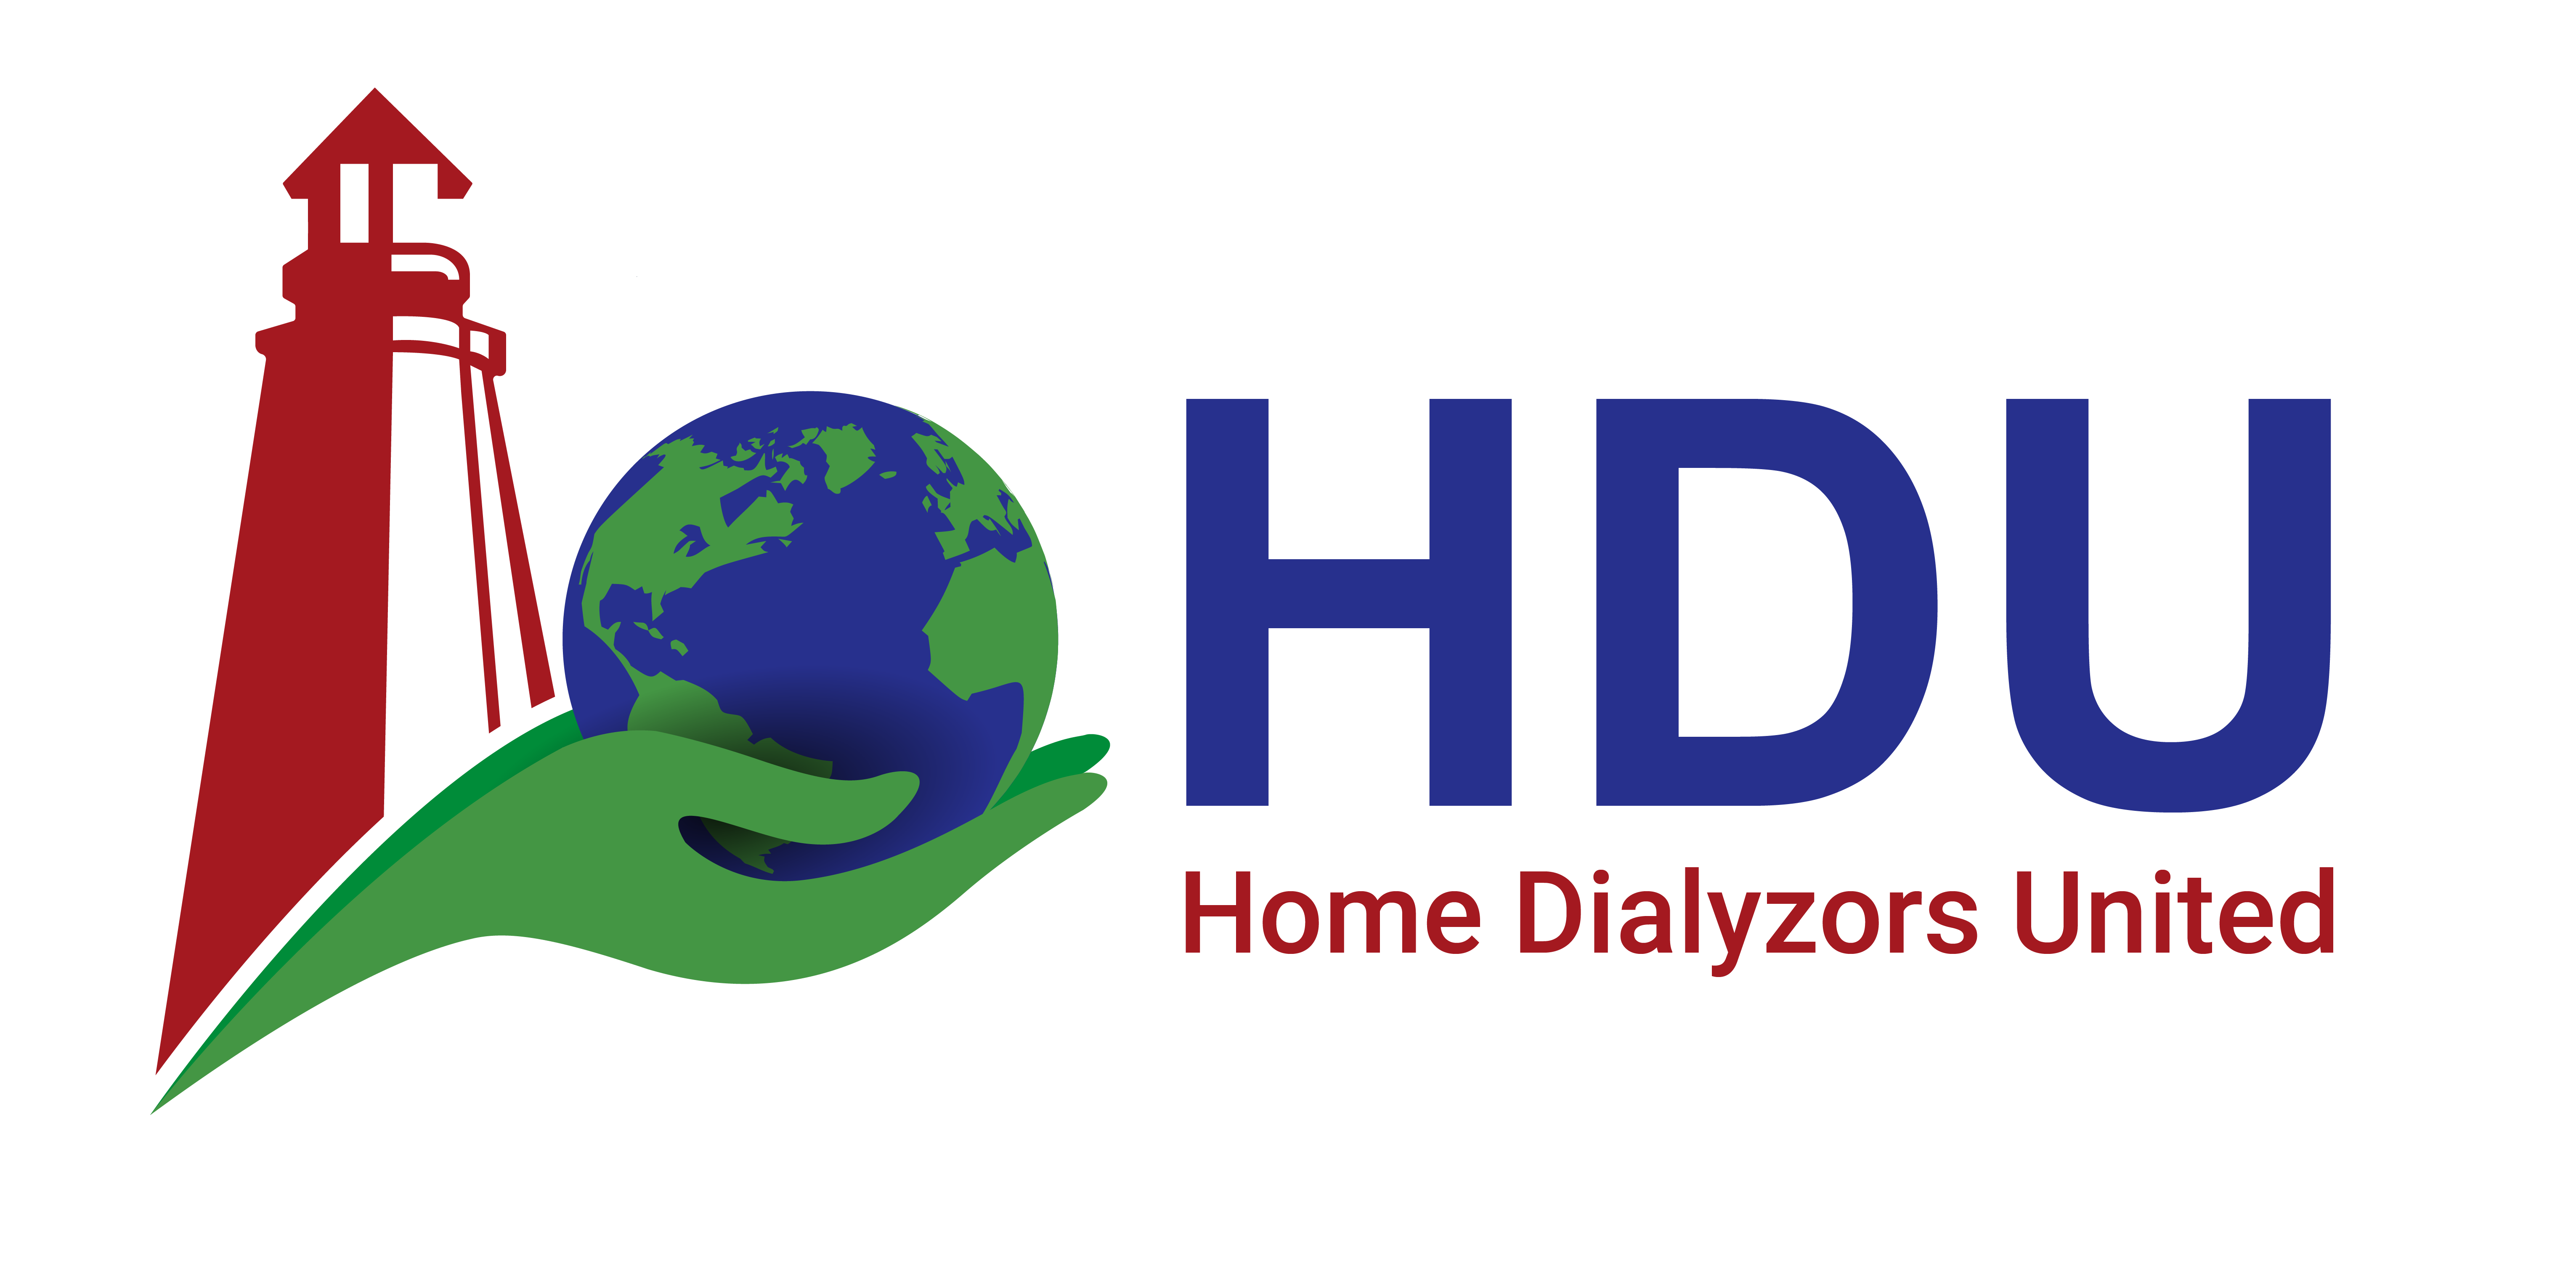 Home Dialyzors United logo